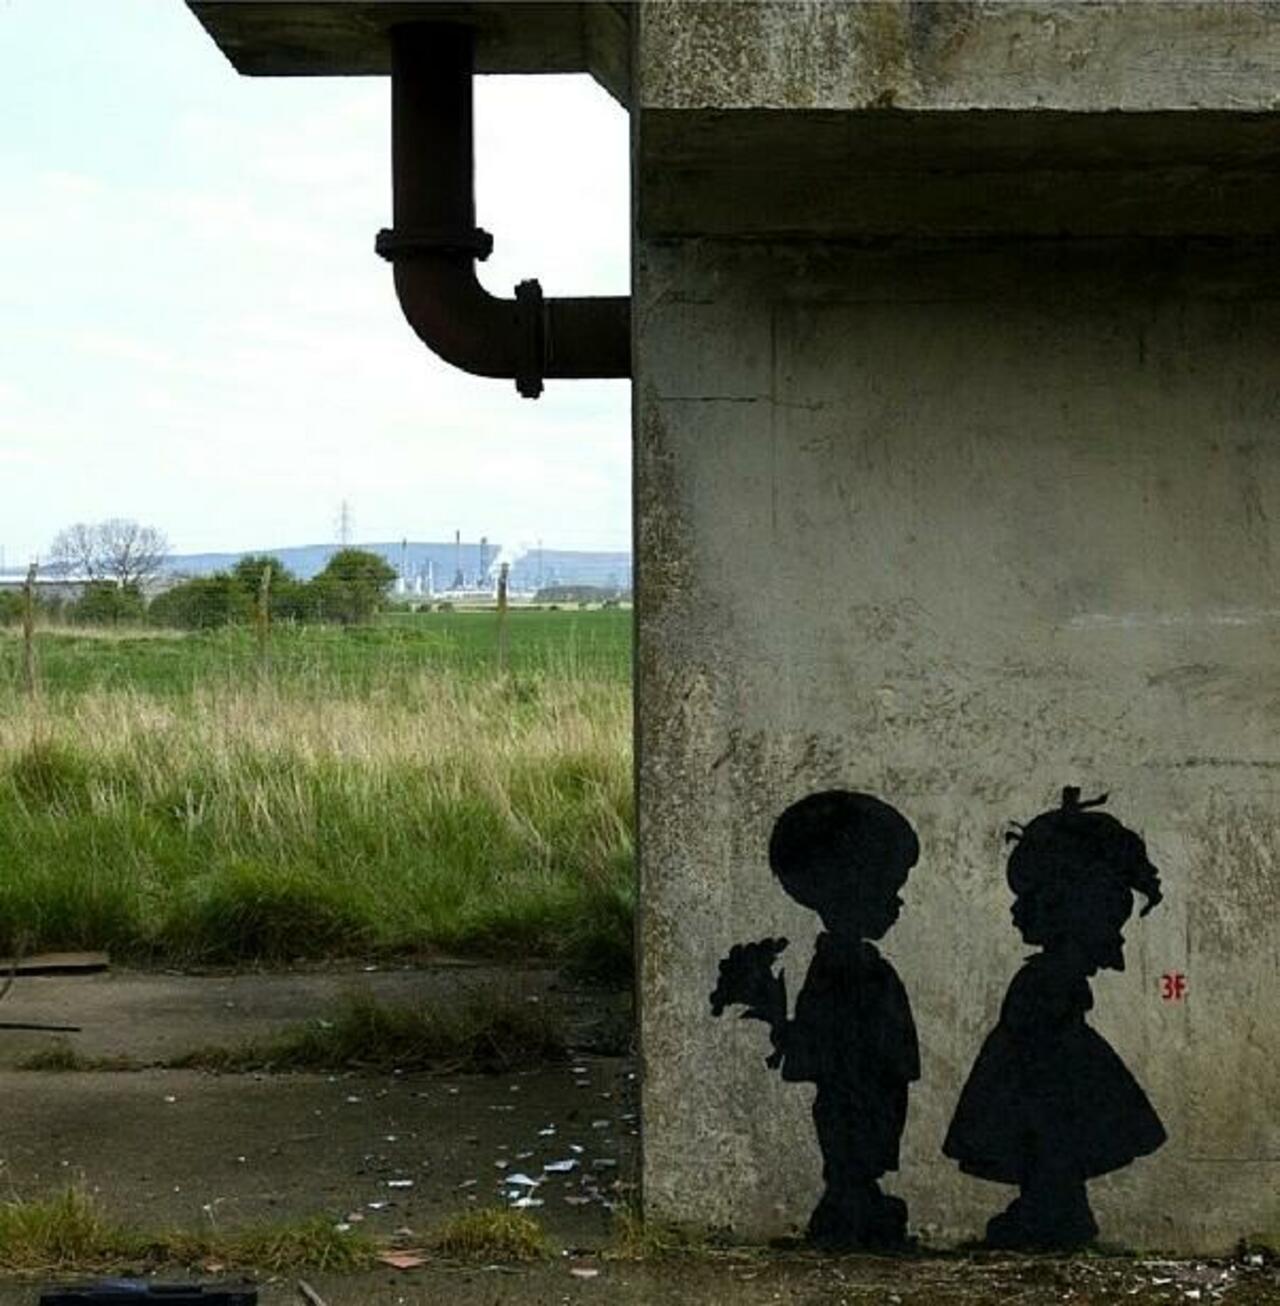 Found love in a hopeless place!

Street Art by 3fountains 

#art #mural #graffiti #streetart http://t.co/G2hrdrq9ED